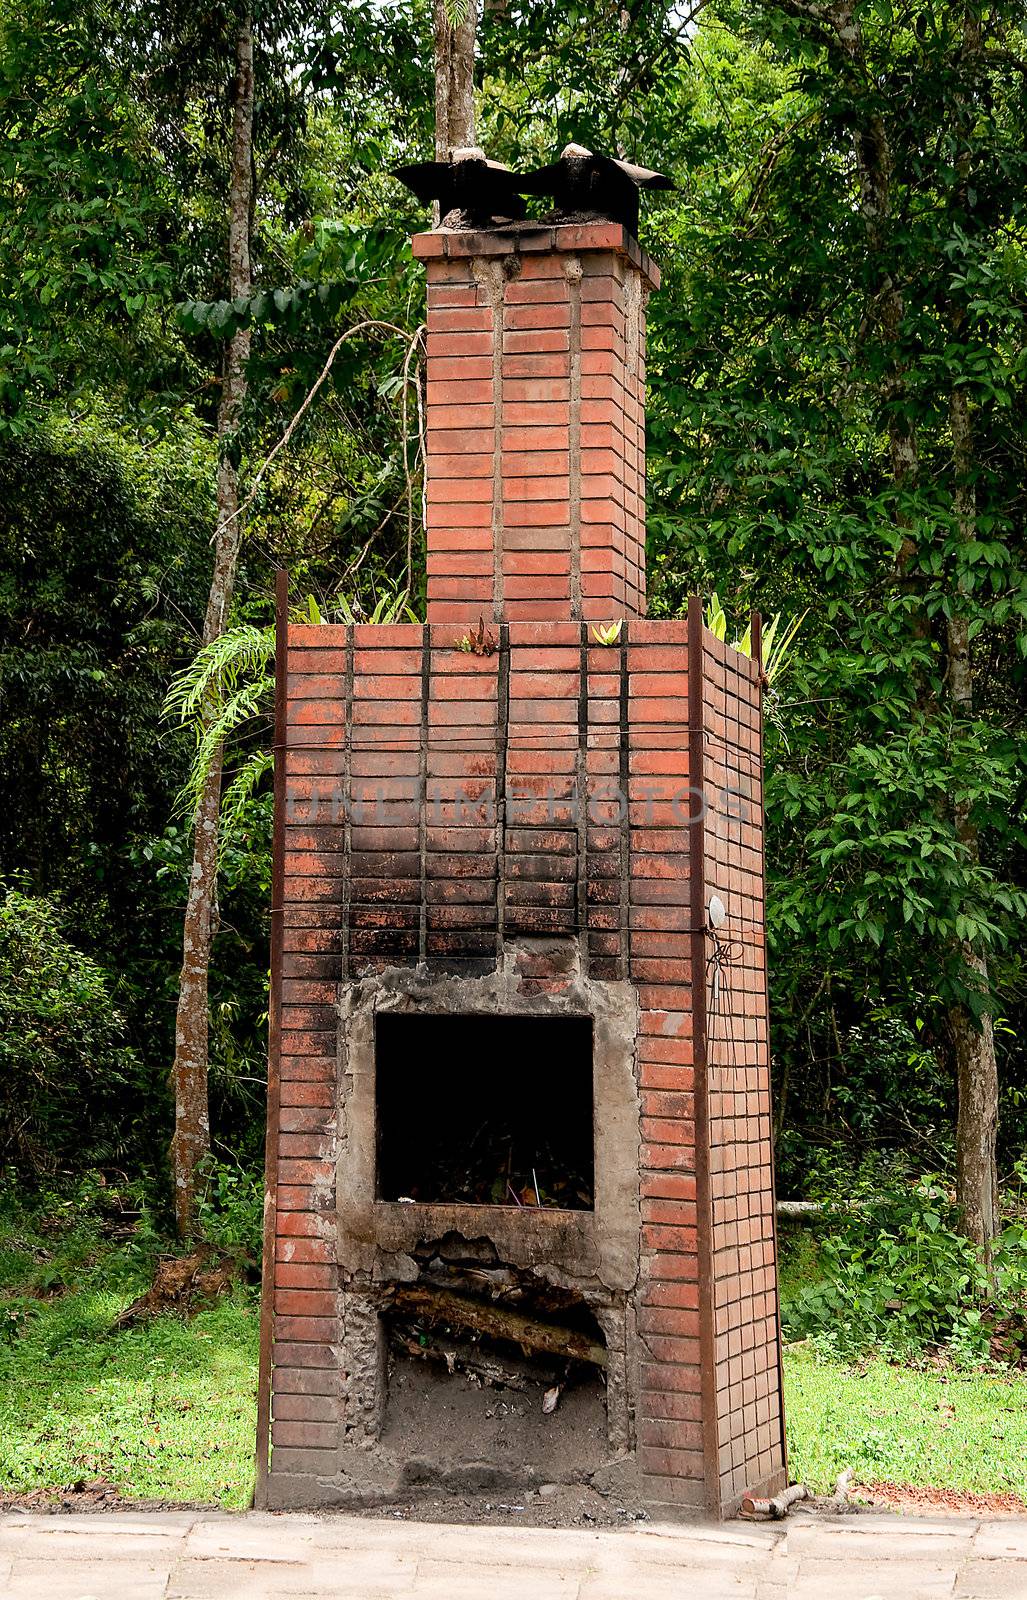 The Brick fireplace of burner garbage